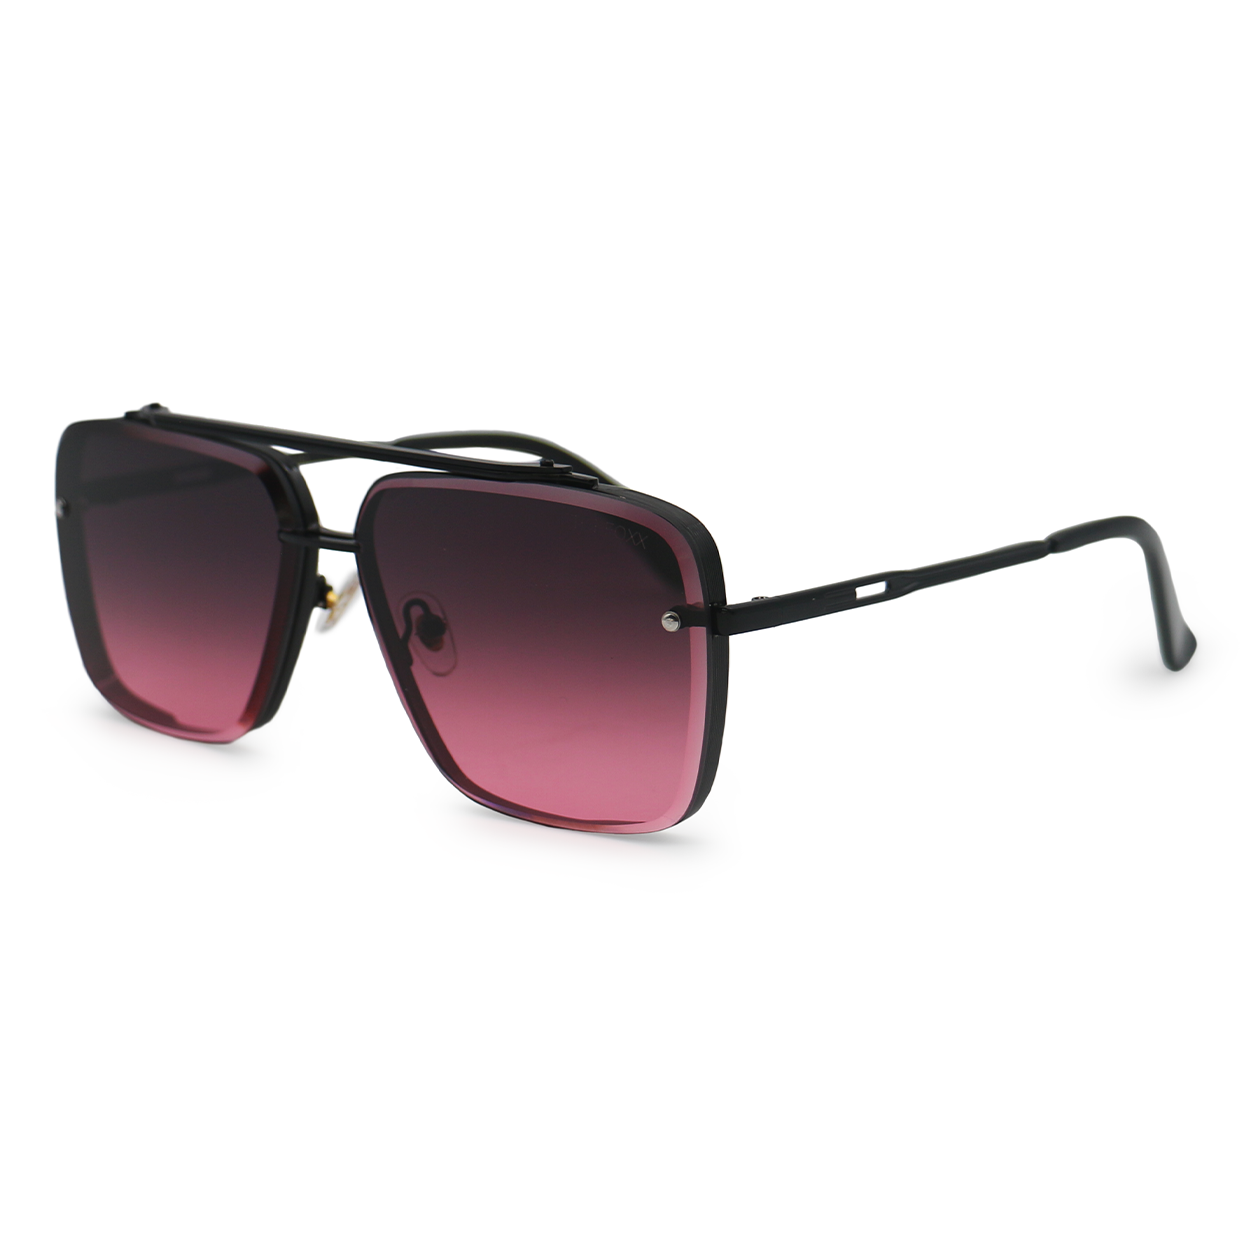 TopFoxx -  Bella Ruby -  Aviator Sunglasses for Women -  Chick women aviators  - Side Profile